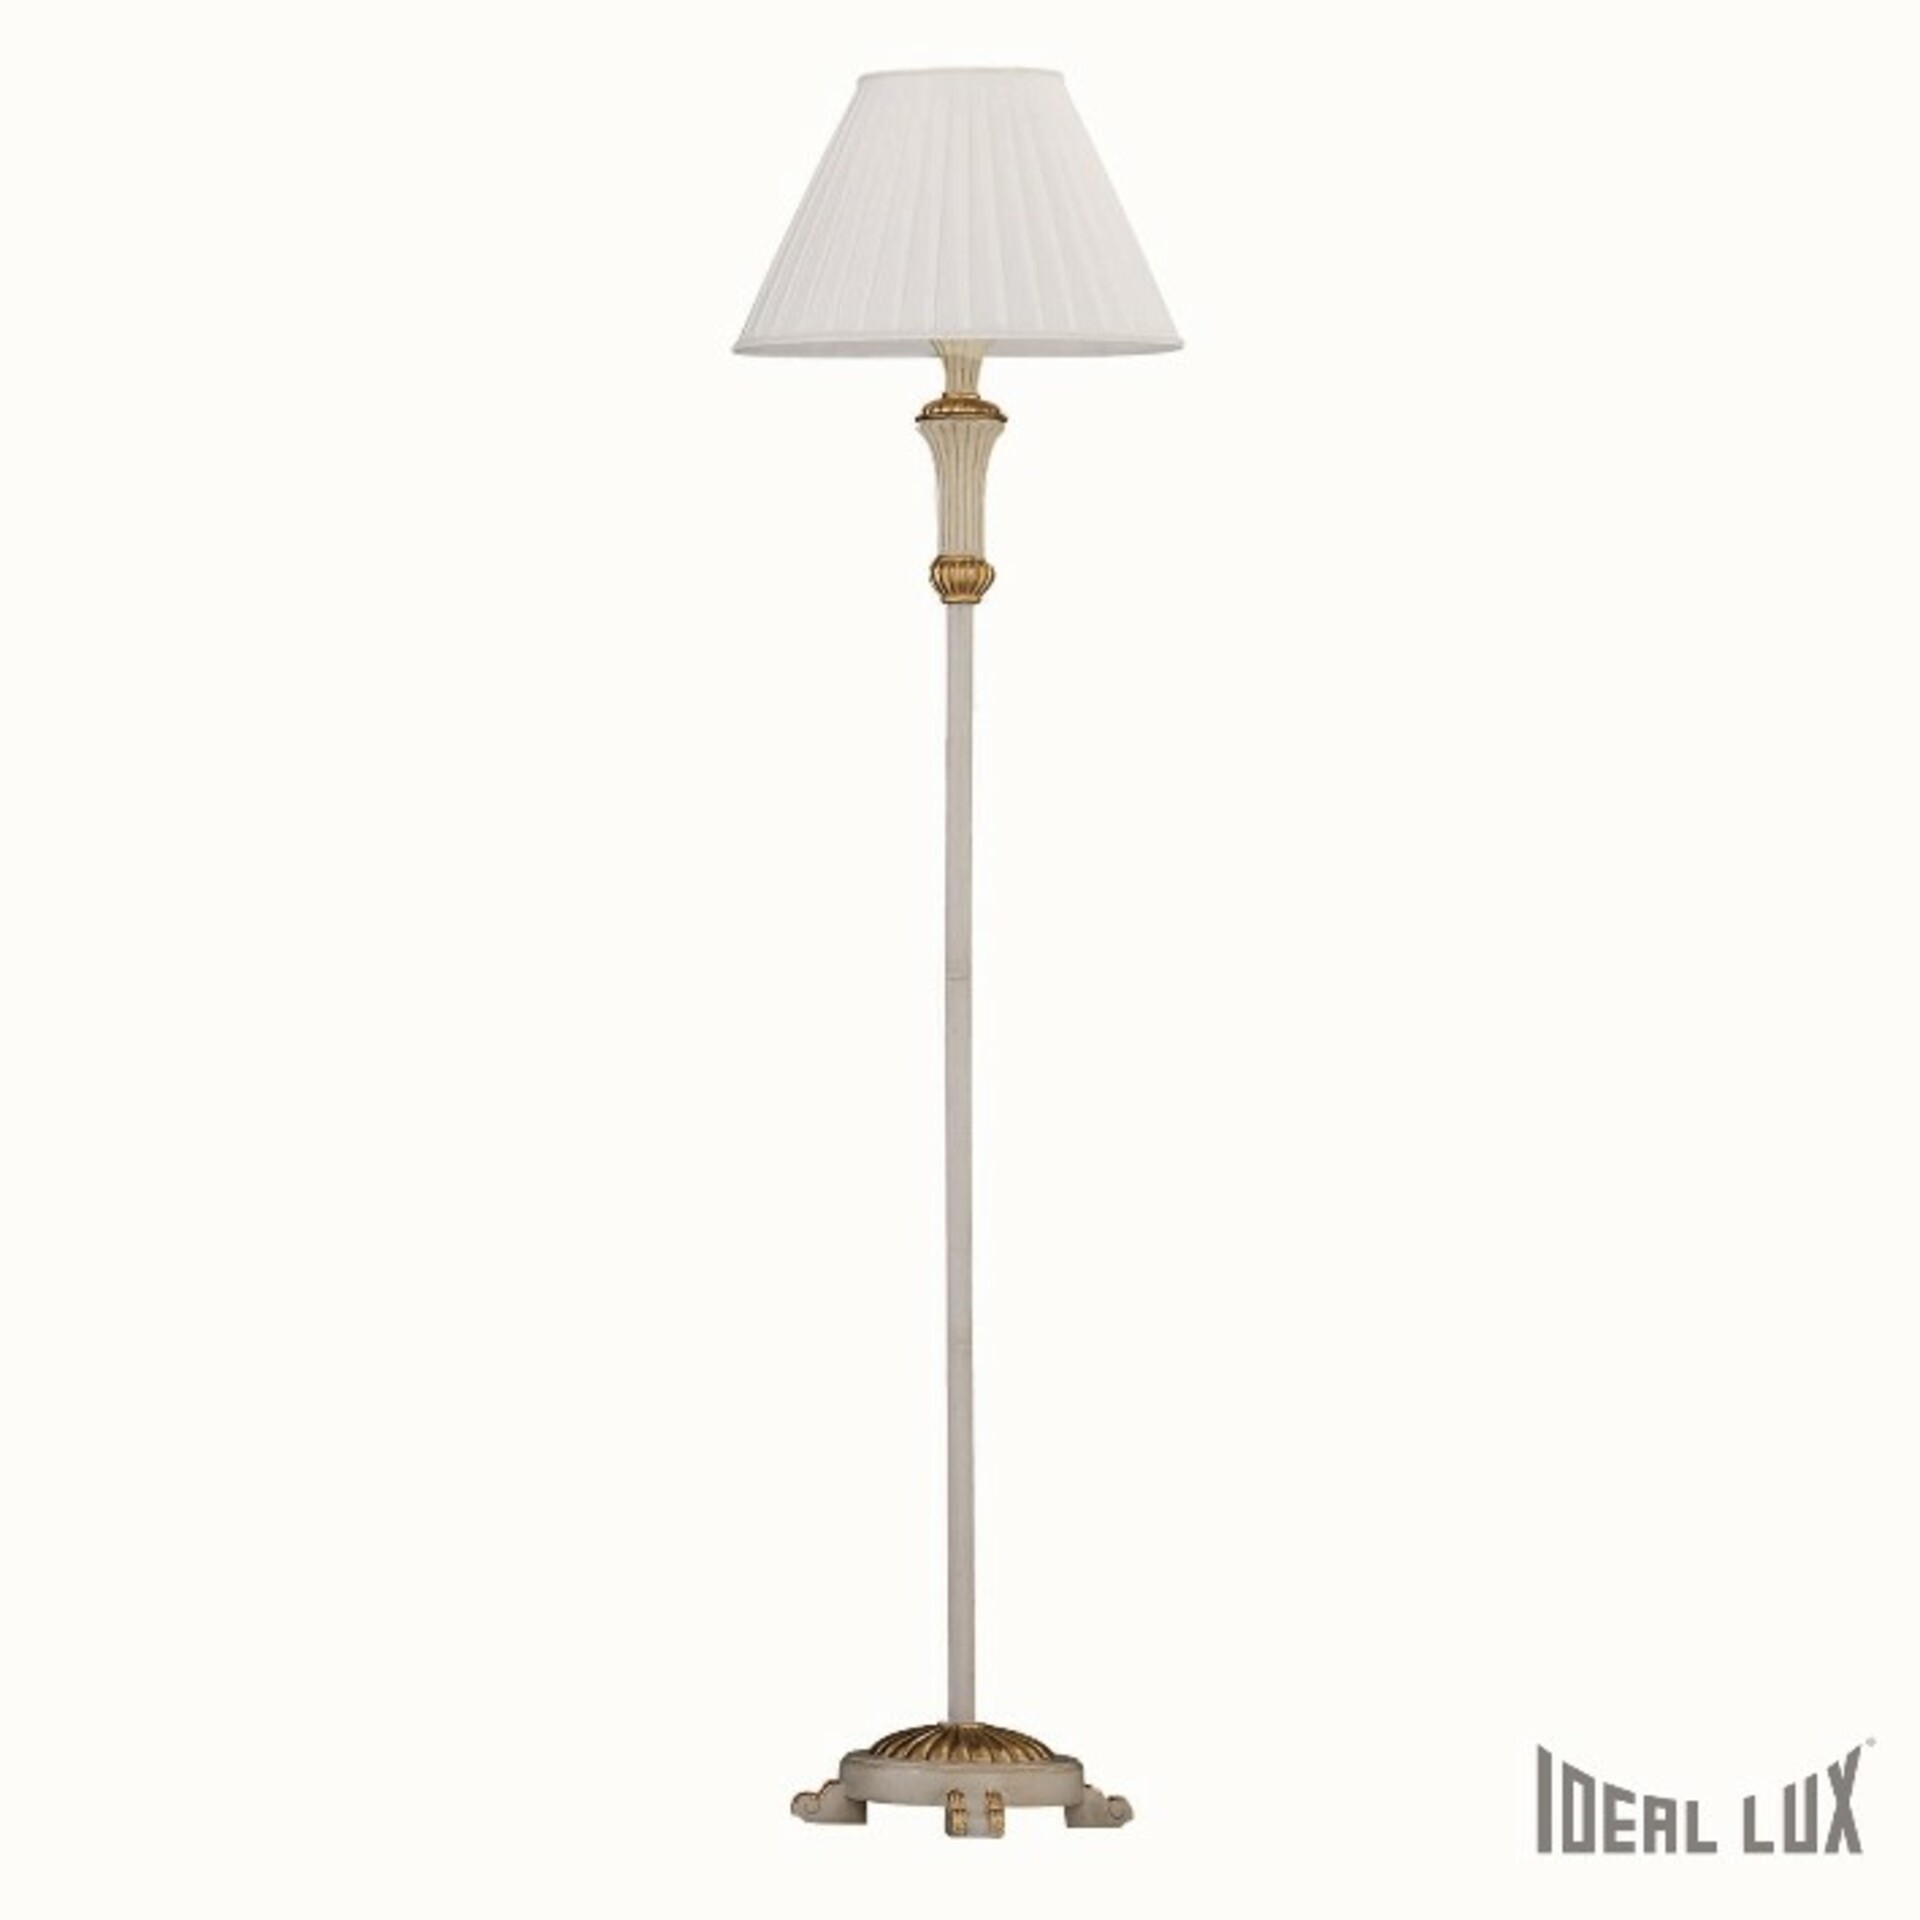 Ideal Lux FIRENZE PT1 LAMPA STOJACÍ 002880